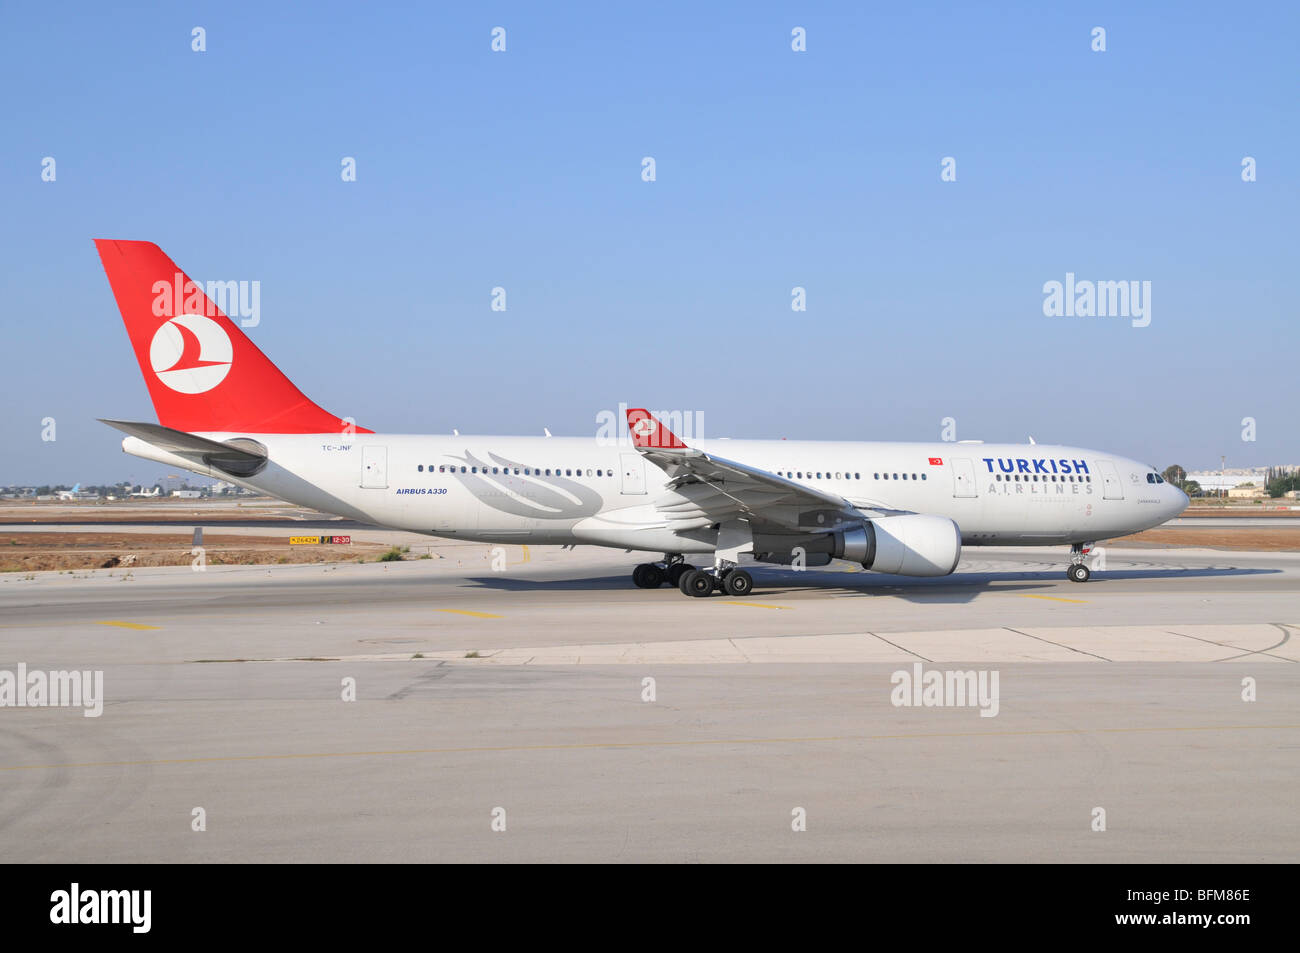 Israel, Ben-Gurion internationaler Flughafen Turkish Airlines Airbus A330 Passagier-Jet startklar Stockfoto